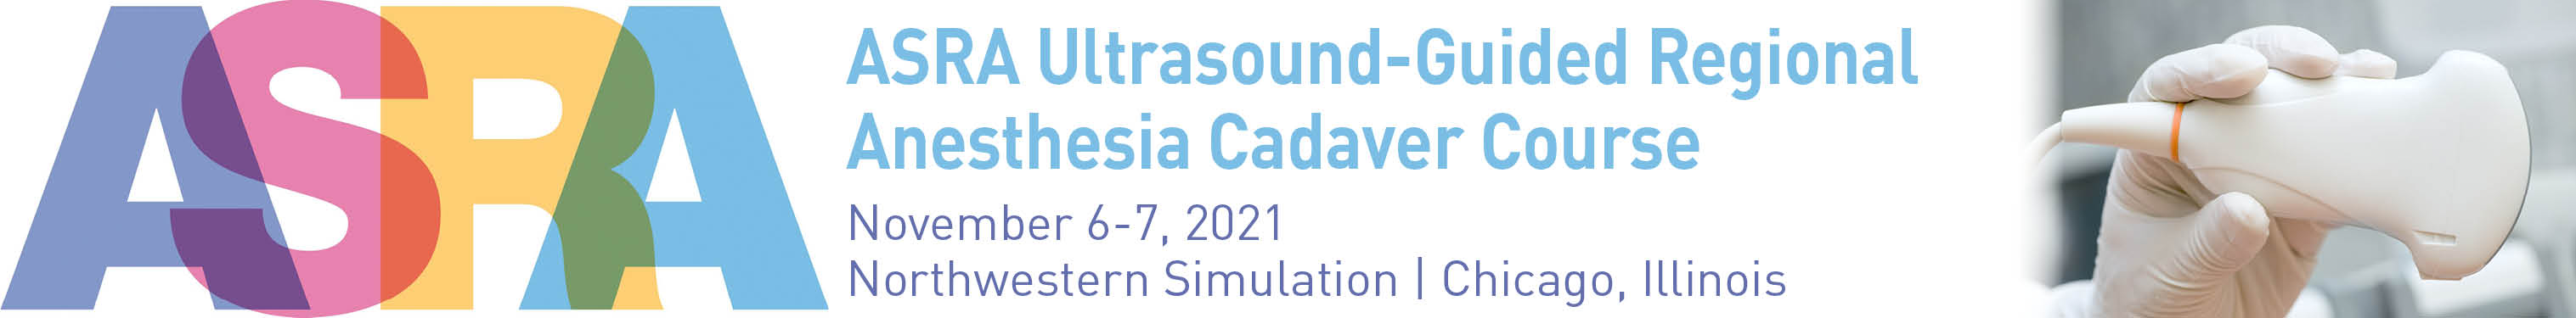 Ultrasound-Guided Regional Anesthesia Cadaver Course